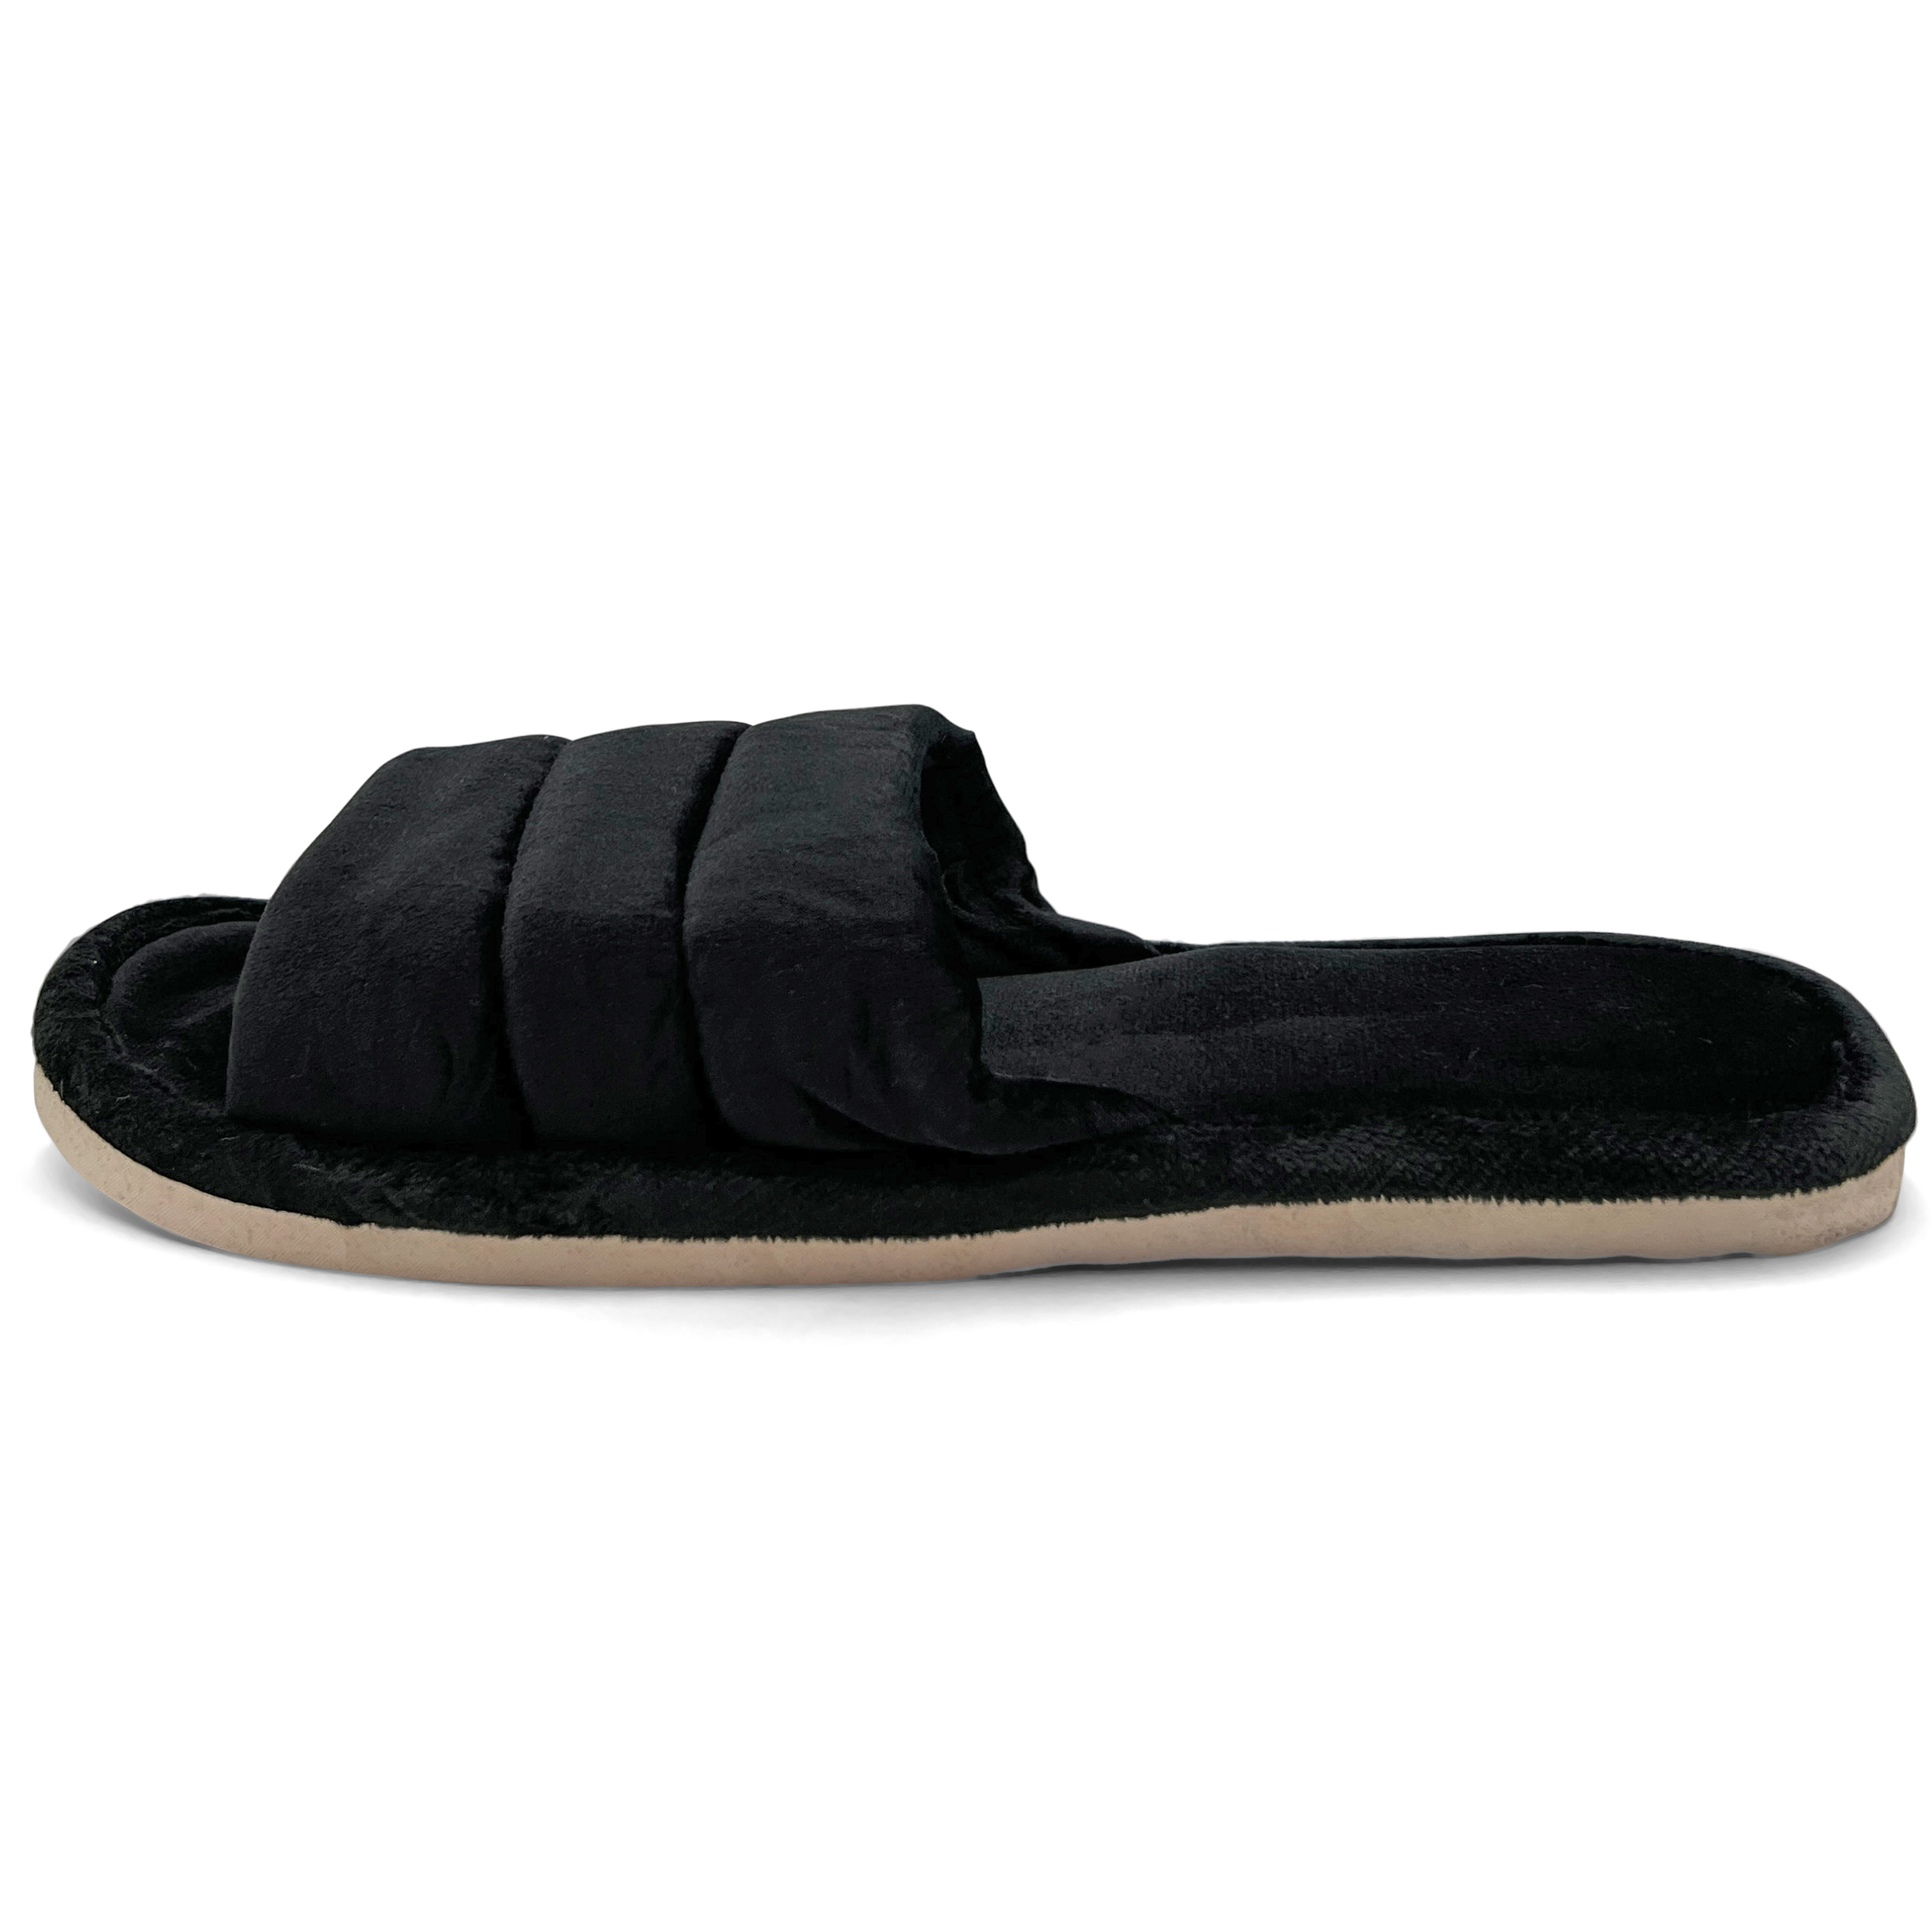 Men/Womens Unisex Slippers Open Toe House Shoes Fuzzy Slide | eBay